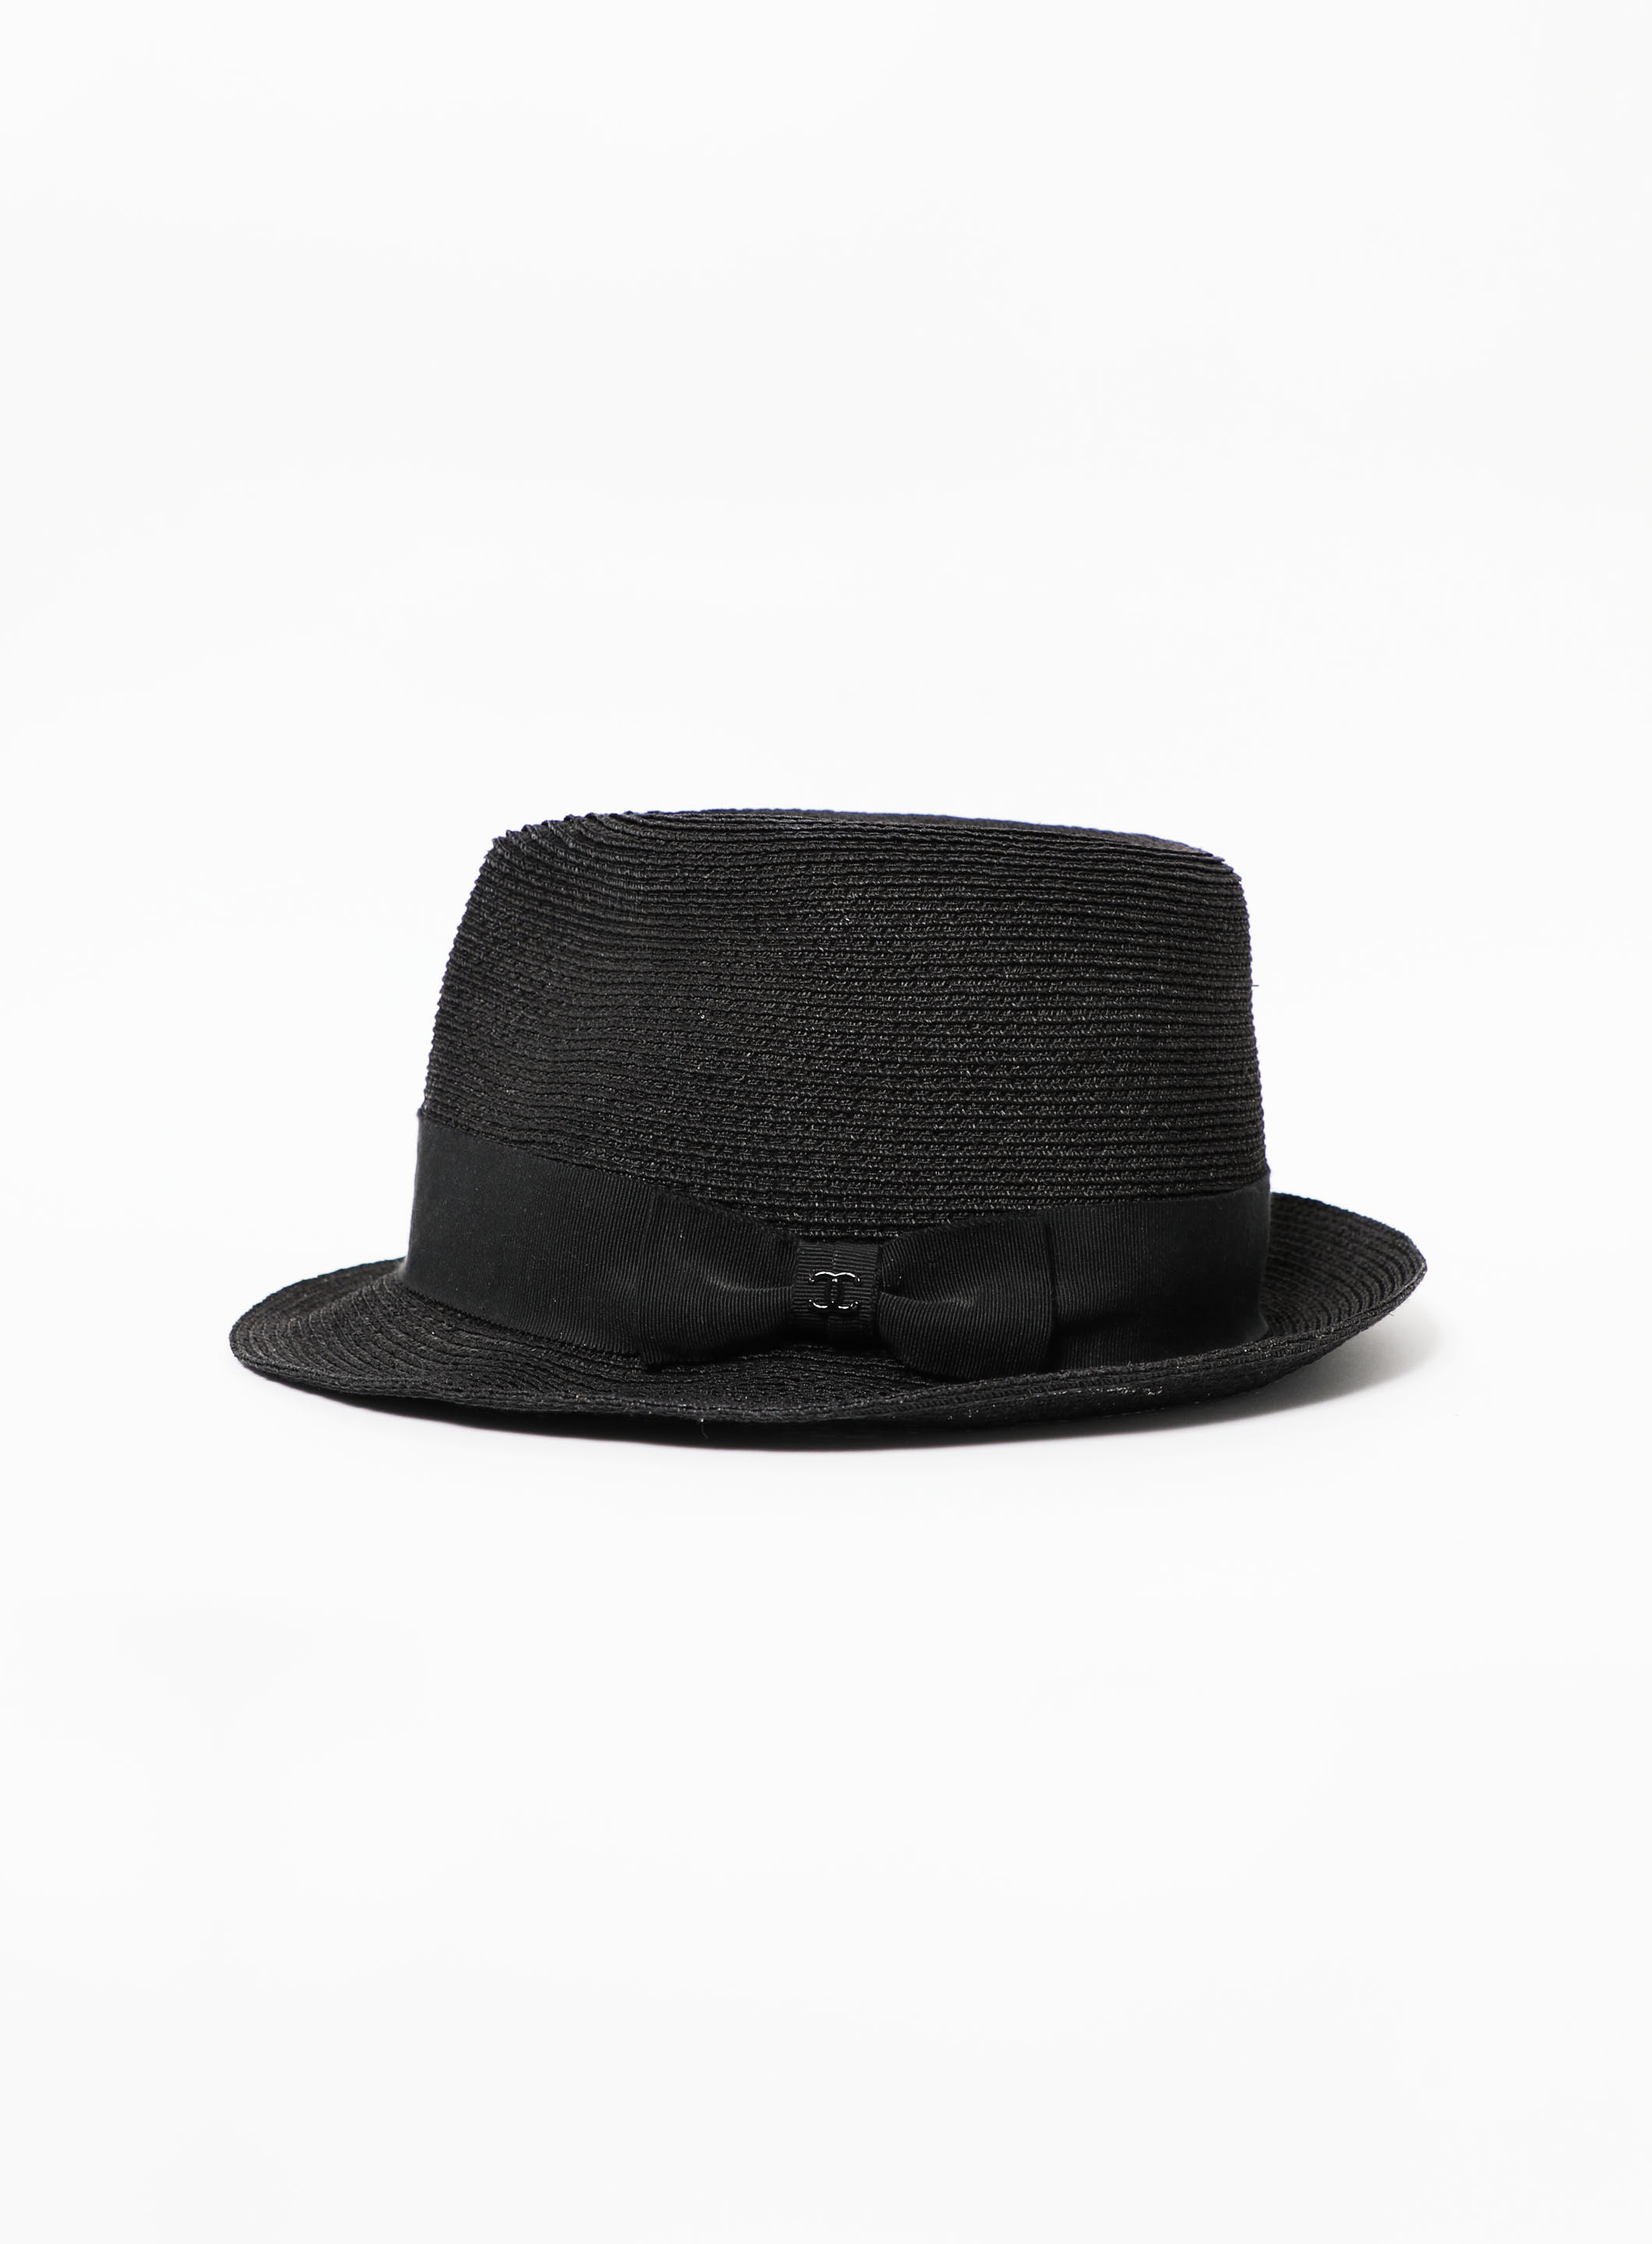 Chanel Cashmere CC Beanie - Neutrals Hats, Accessories - CHA791809